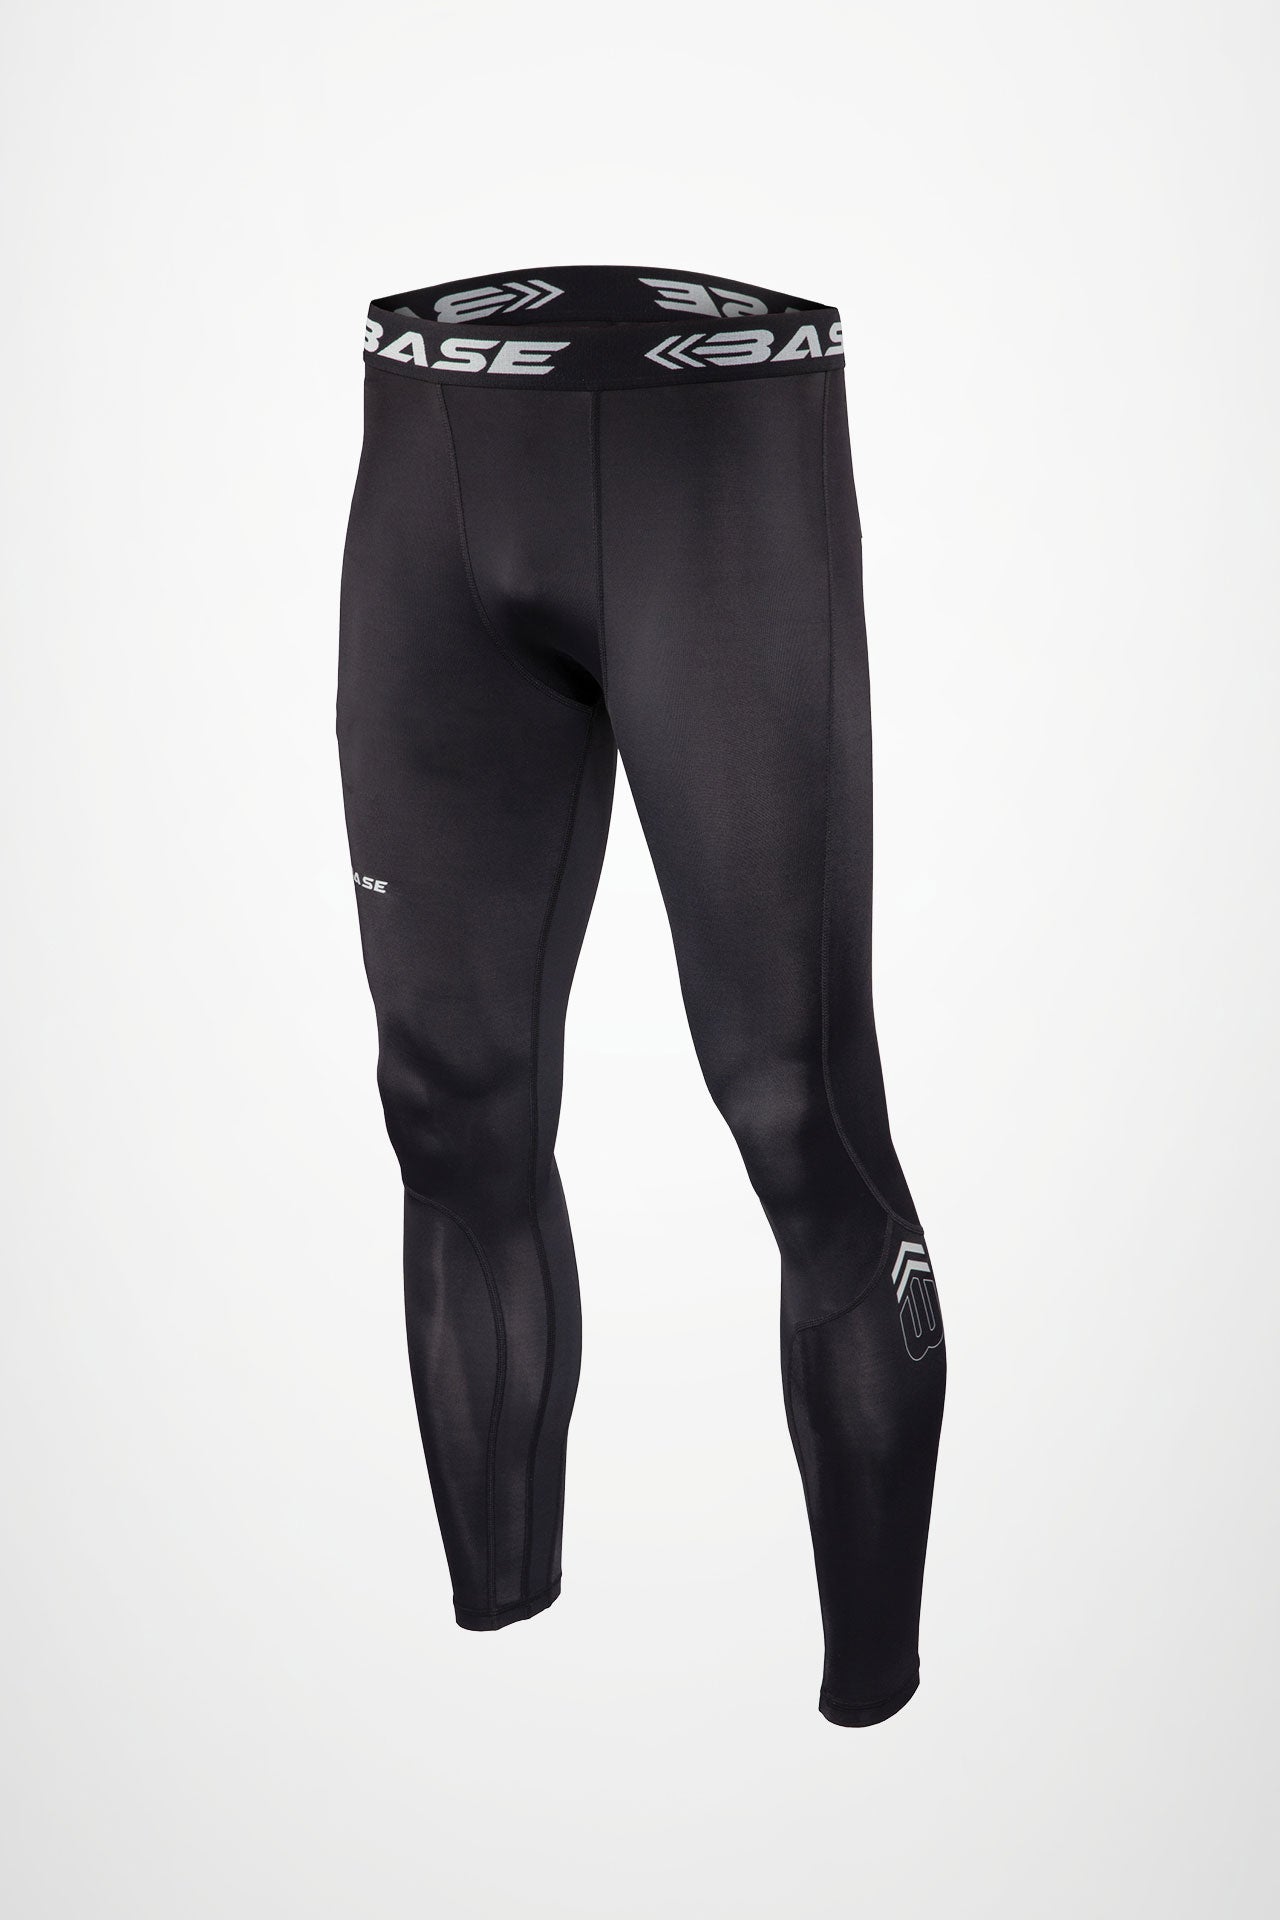 Jonscart Men's 3/4 One Leg Compression Capri Tights Pants Athletic Base  Layer Underwear Black-r Small